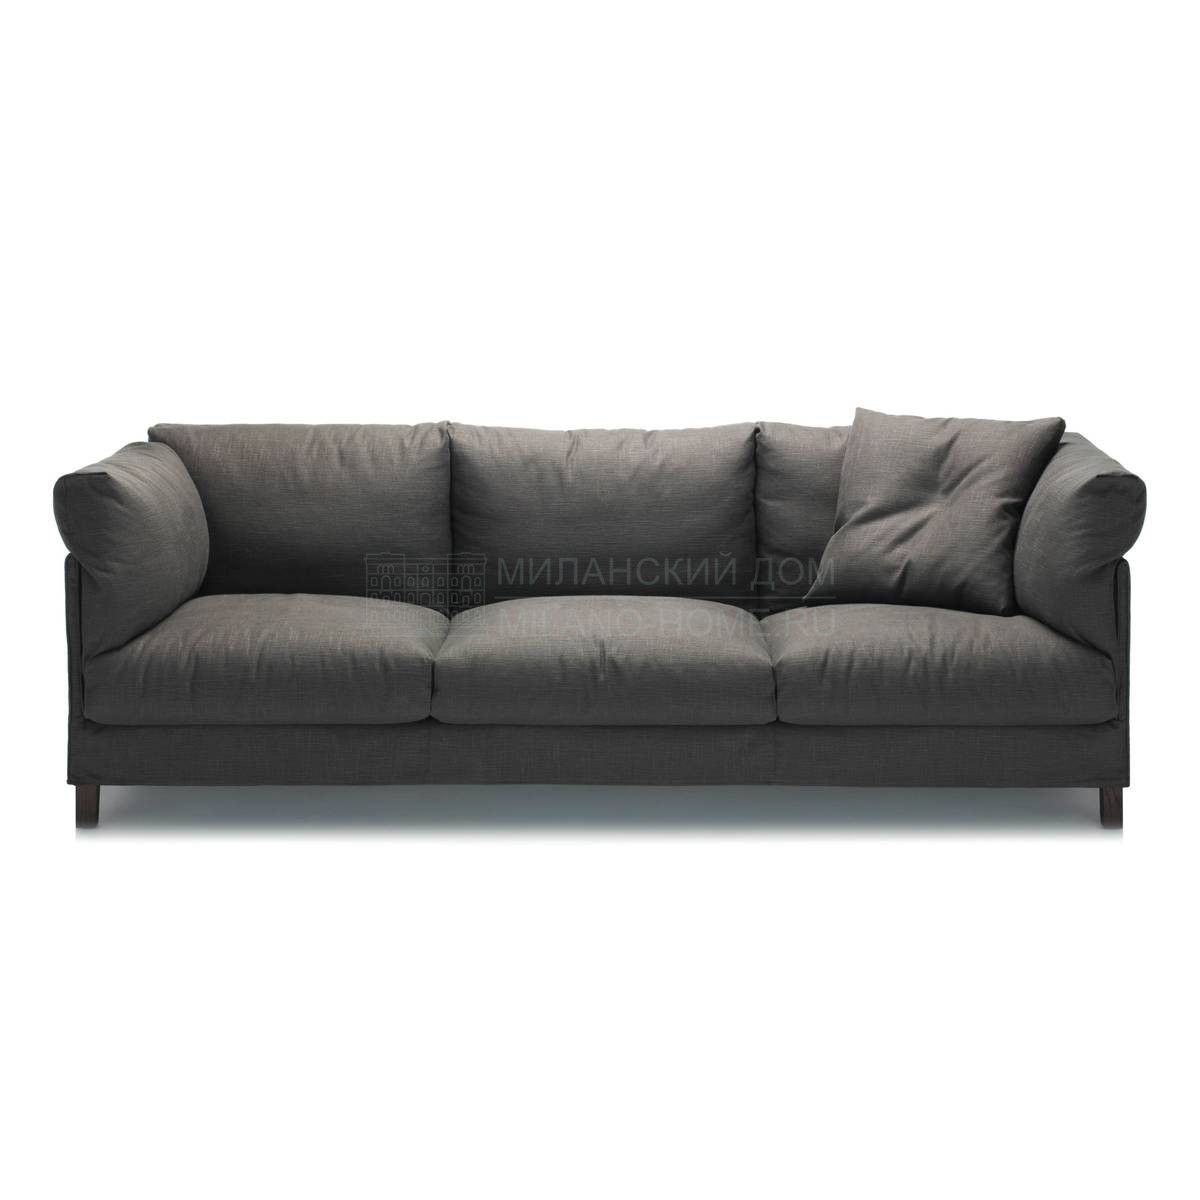 Прямой диван Chemise sofa из Италии фабрики LIVING DIVANI